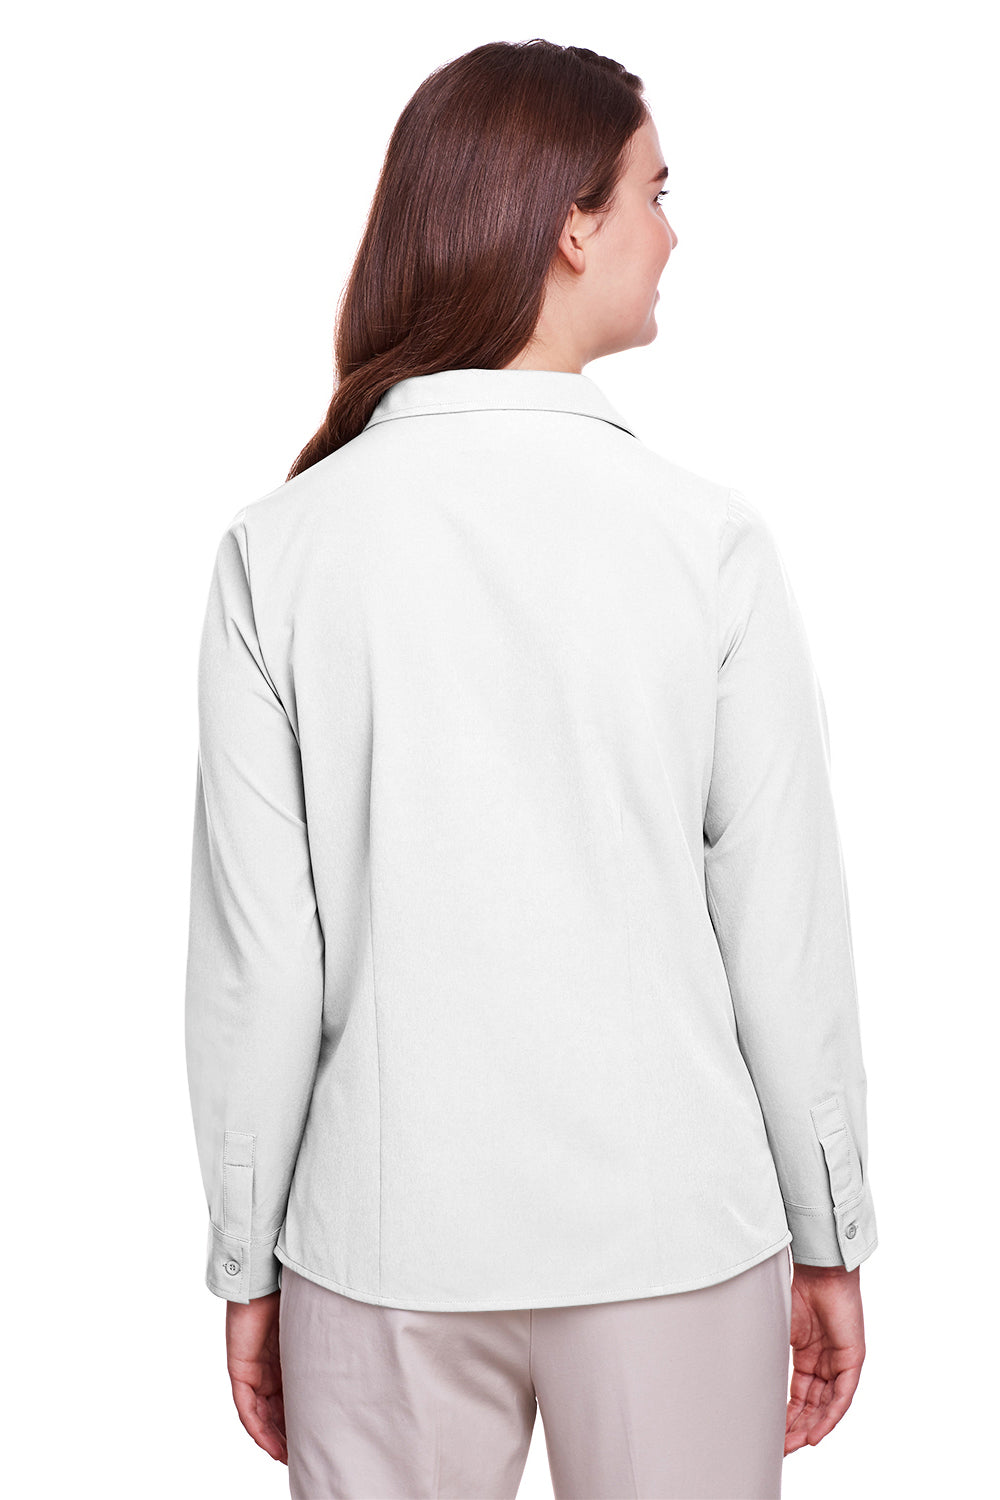 UltraClub UC500W Womens Bradley Performance Moisture Wicking Long Sleeve Button Down Shirt White Back